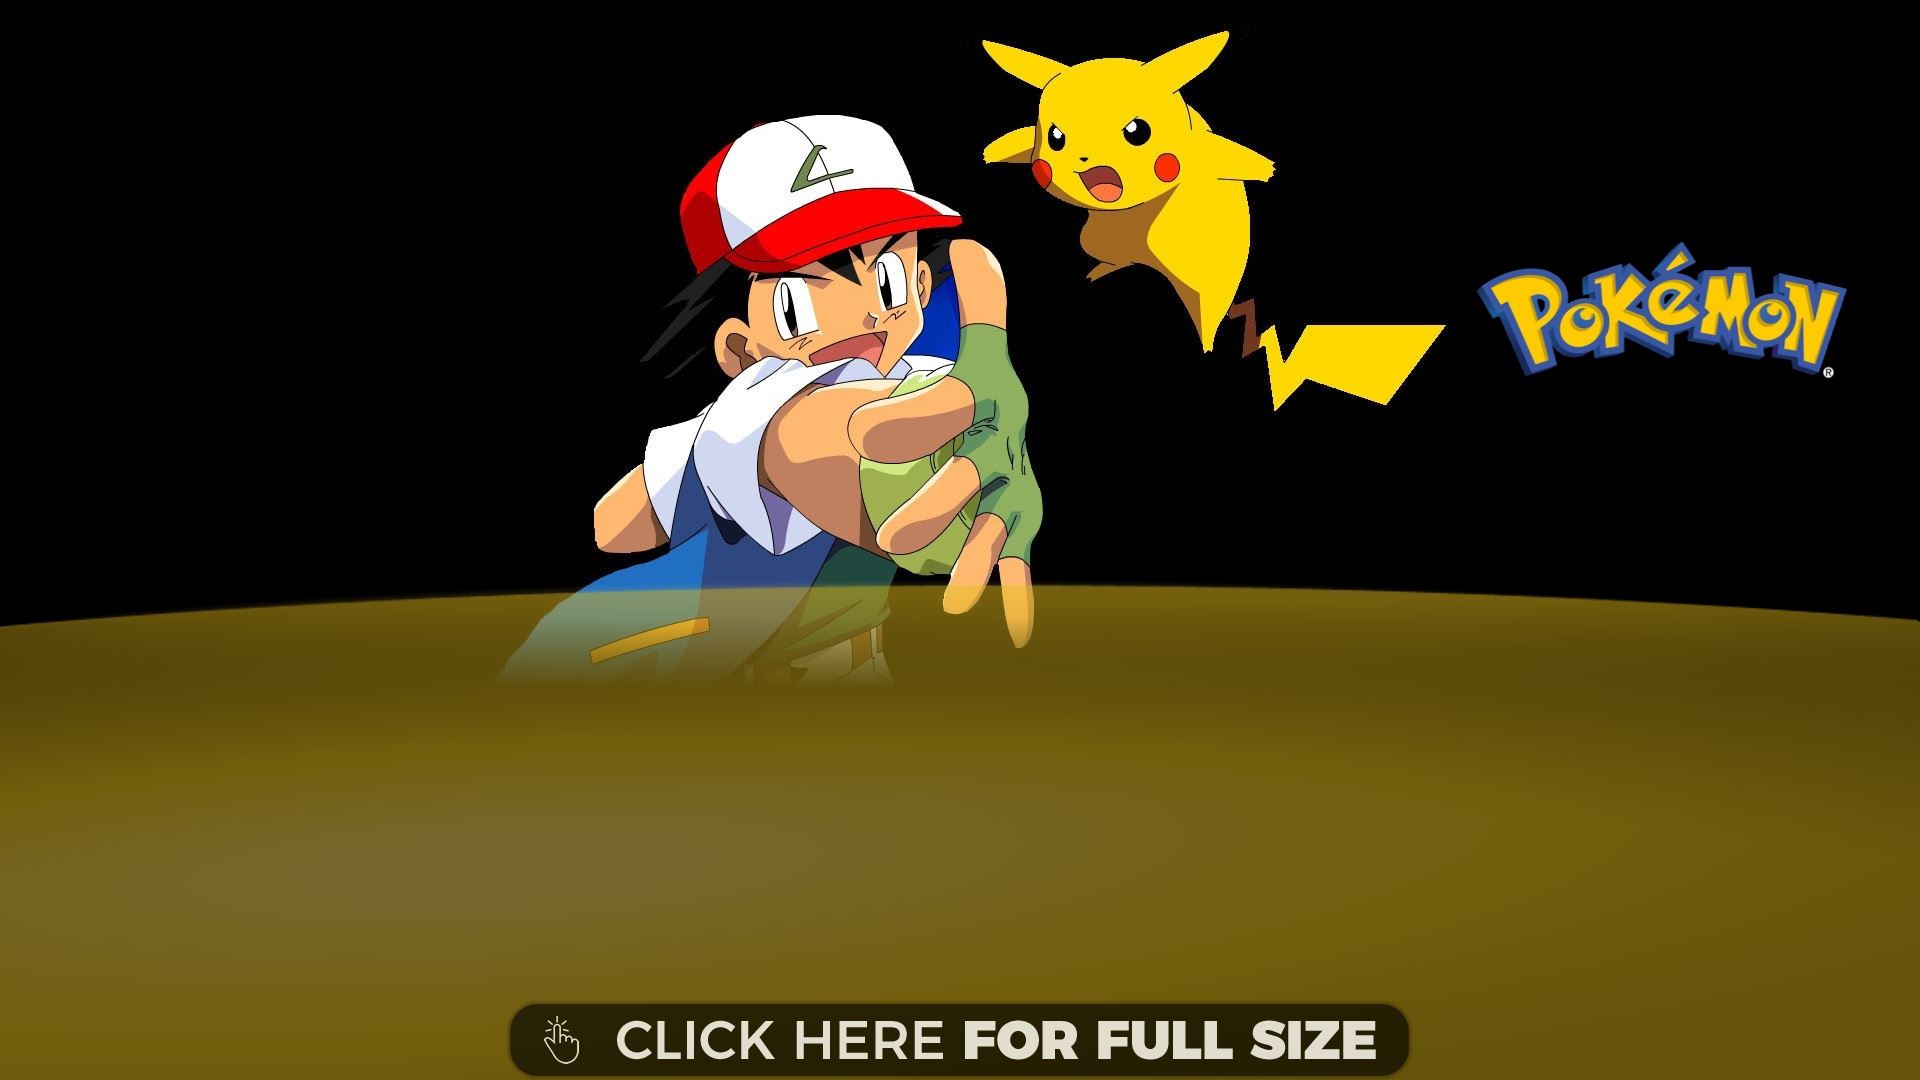 Pokemon Ash And Pikachu Original Image